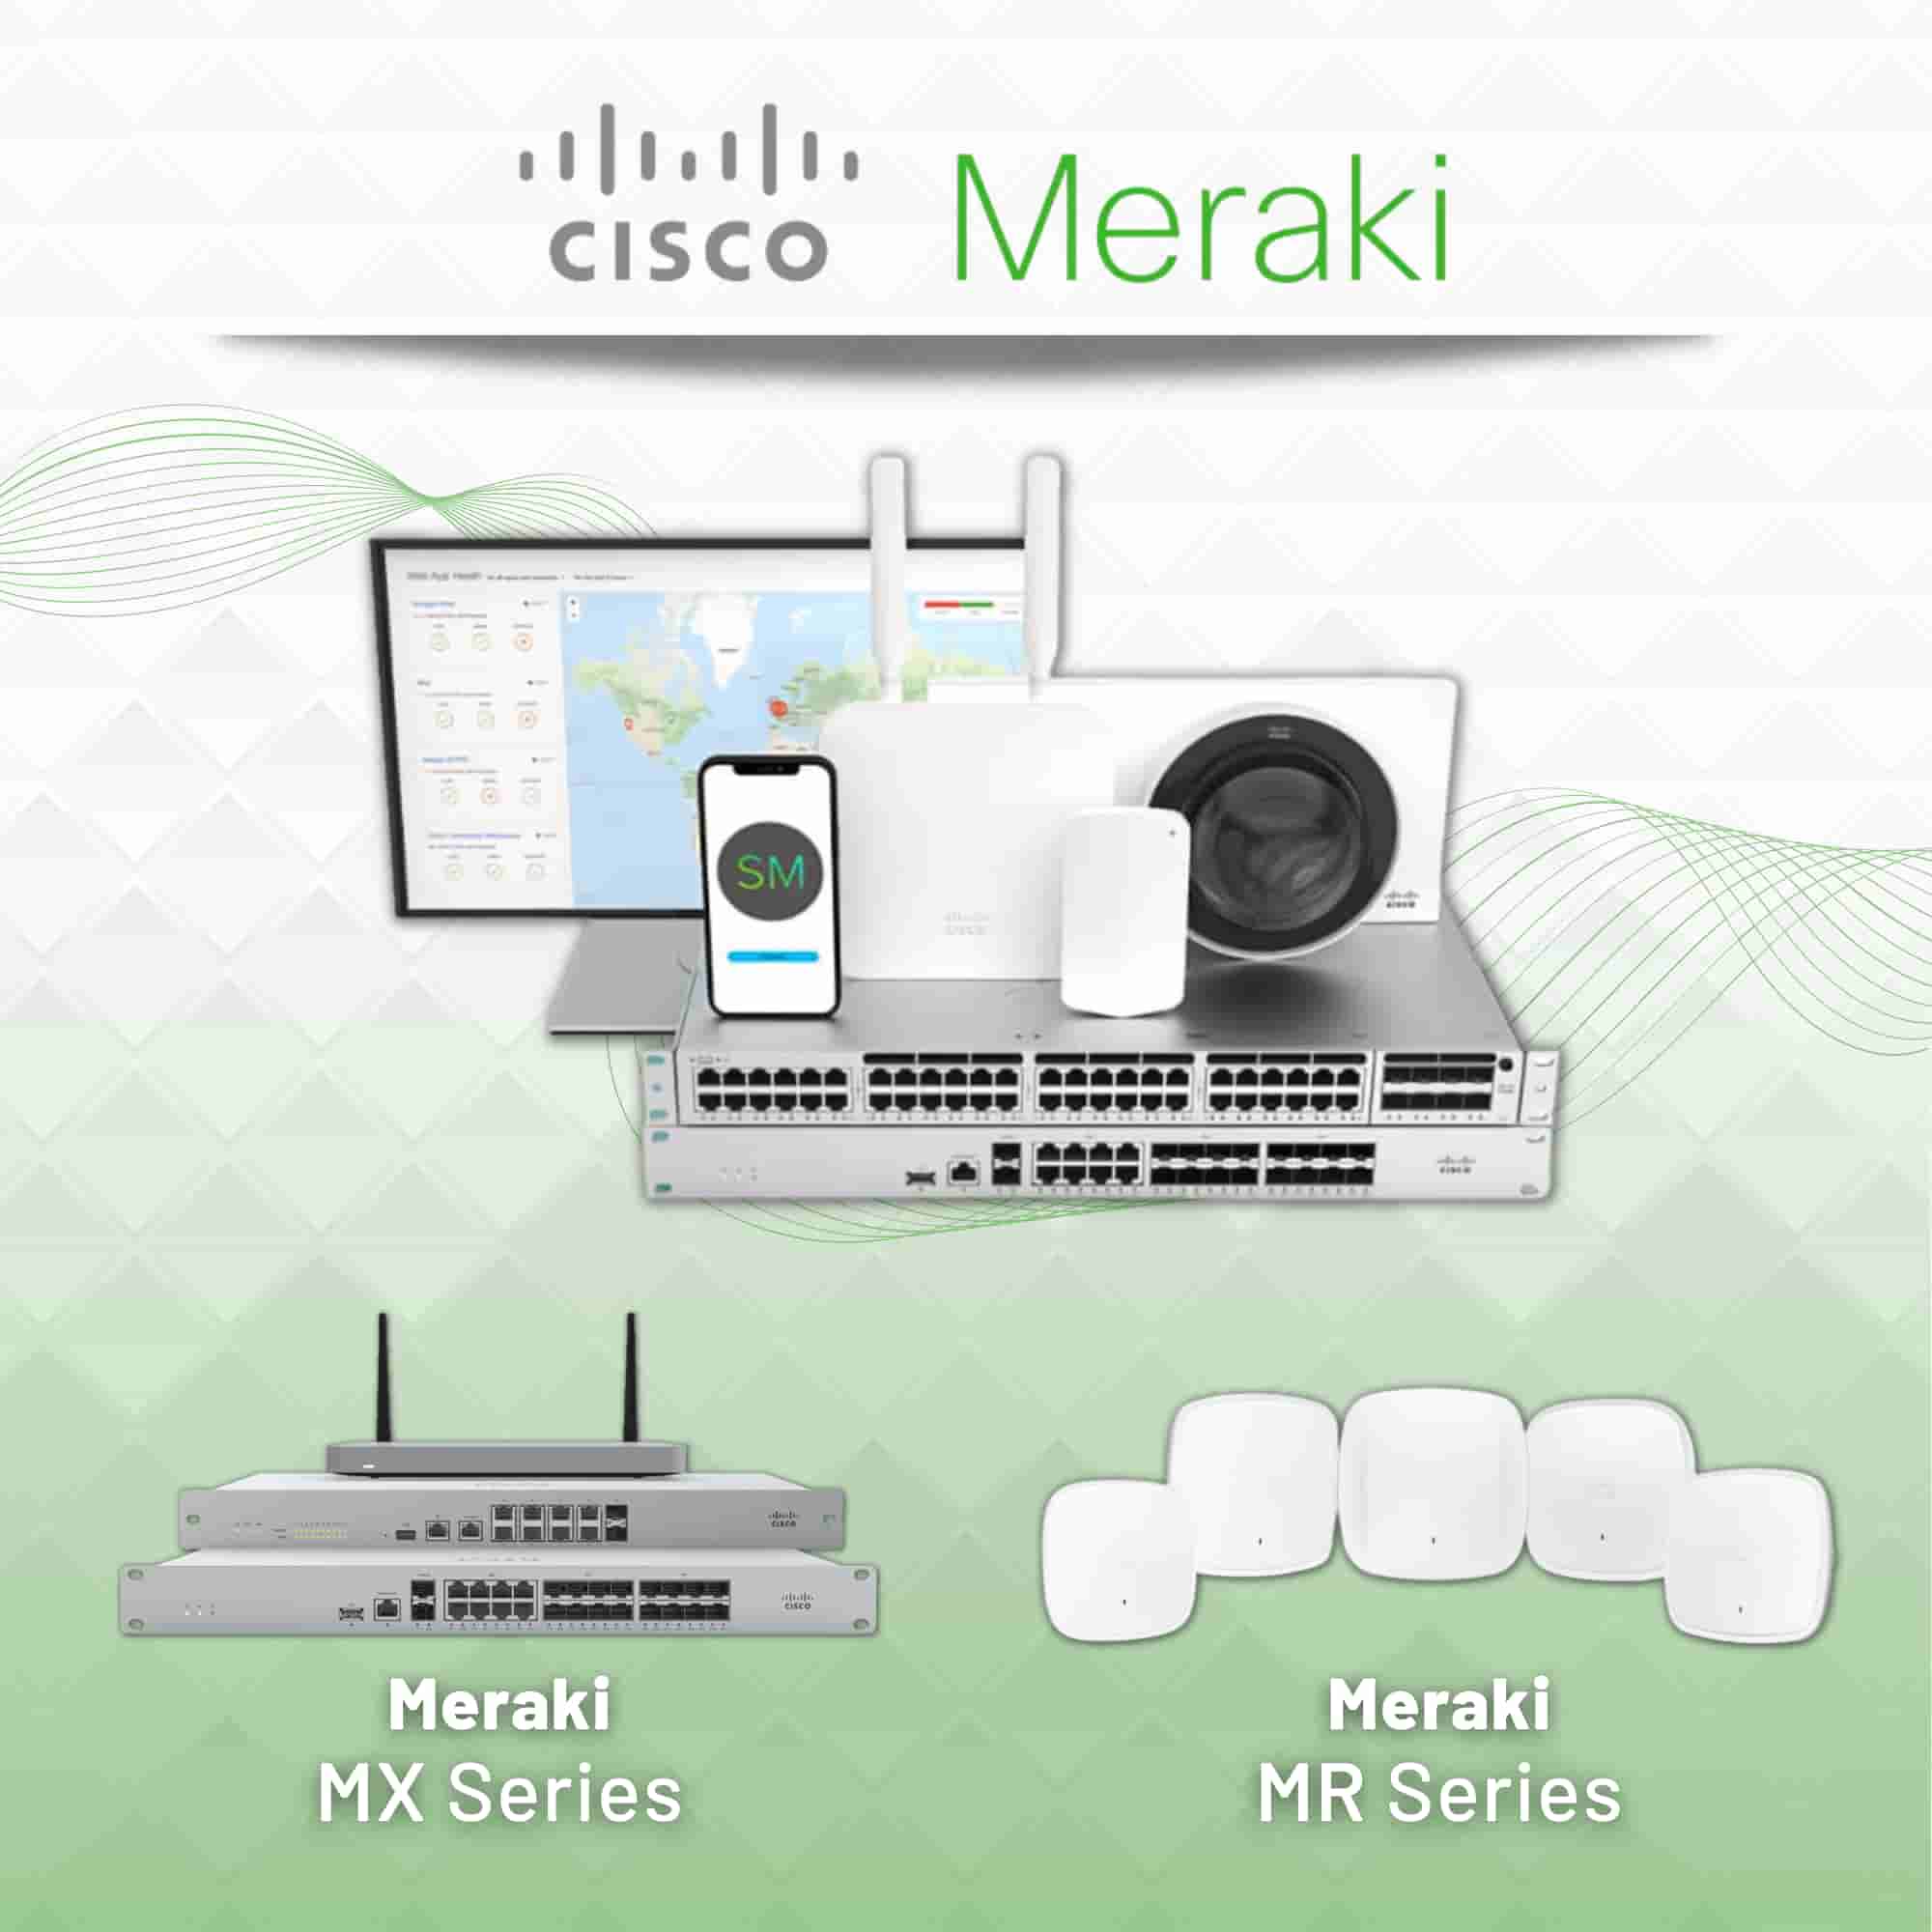 Meraki MS425-16 Cloud Managed 10GbE Switch